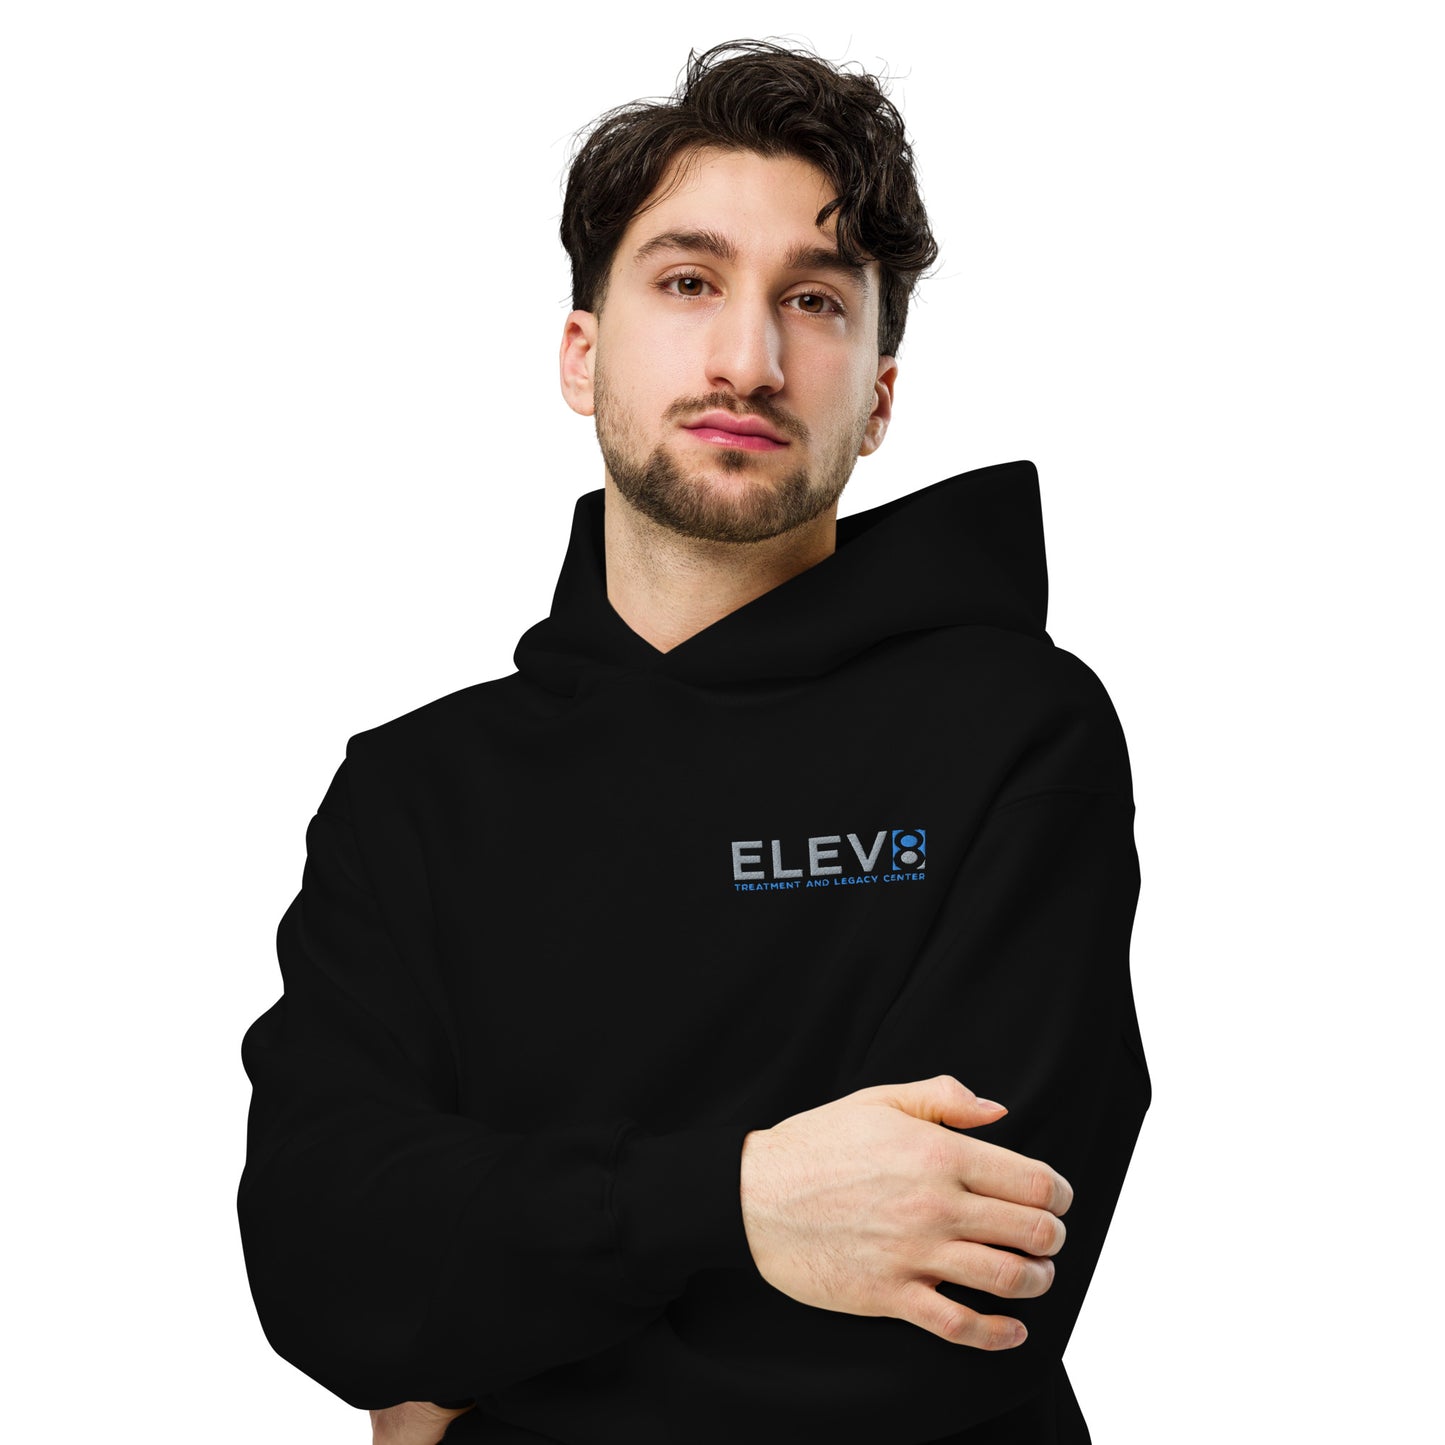 Elev8 Unisex oversized hoodie